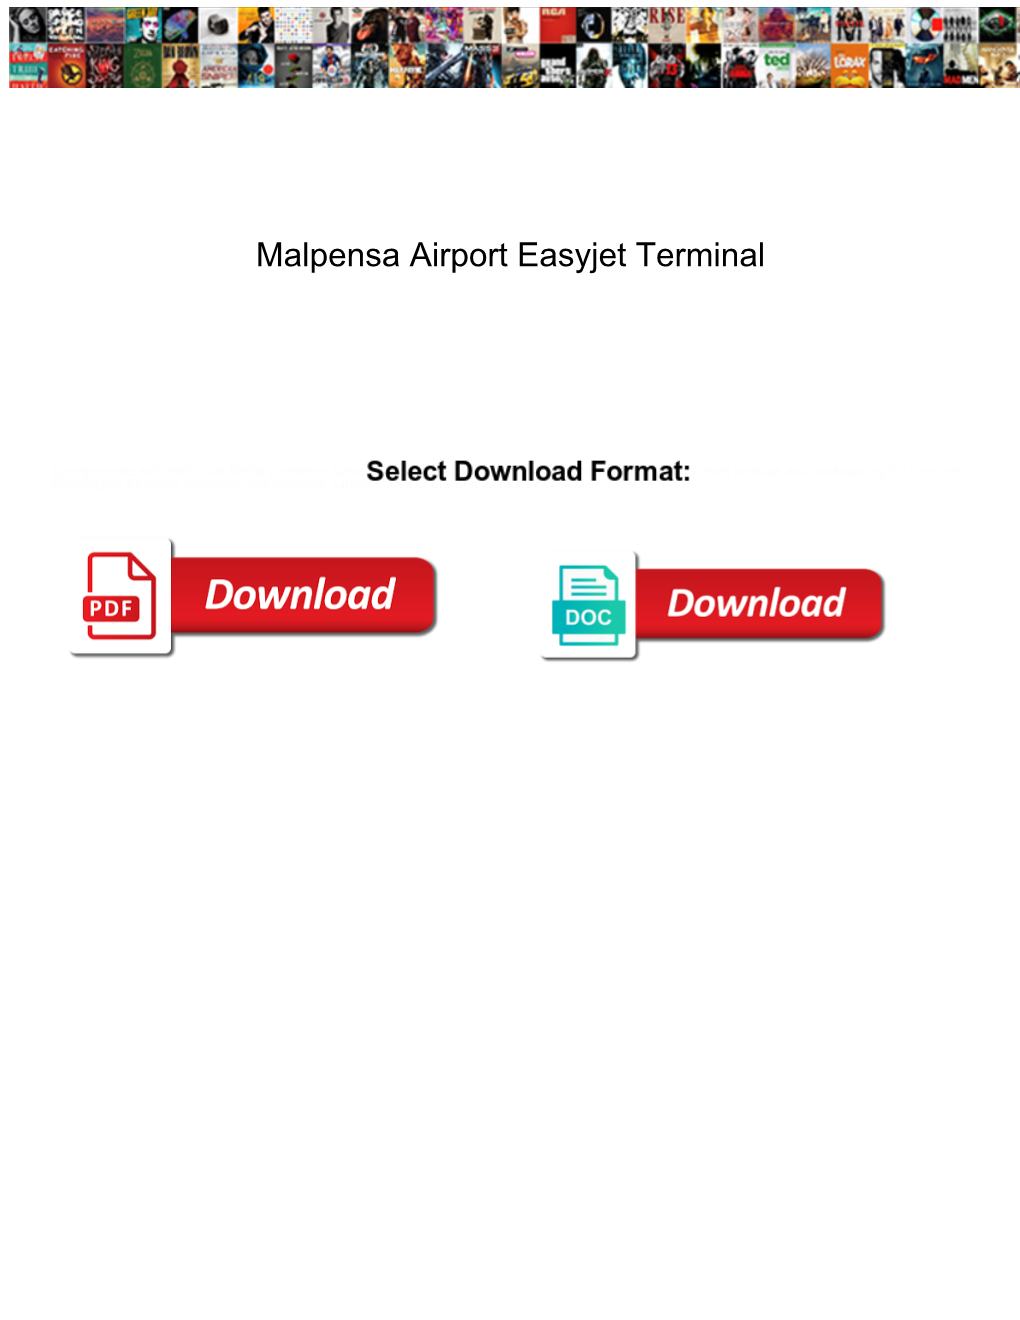 Malpensa Airport Easyjet Terminal